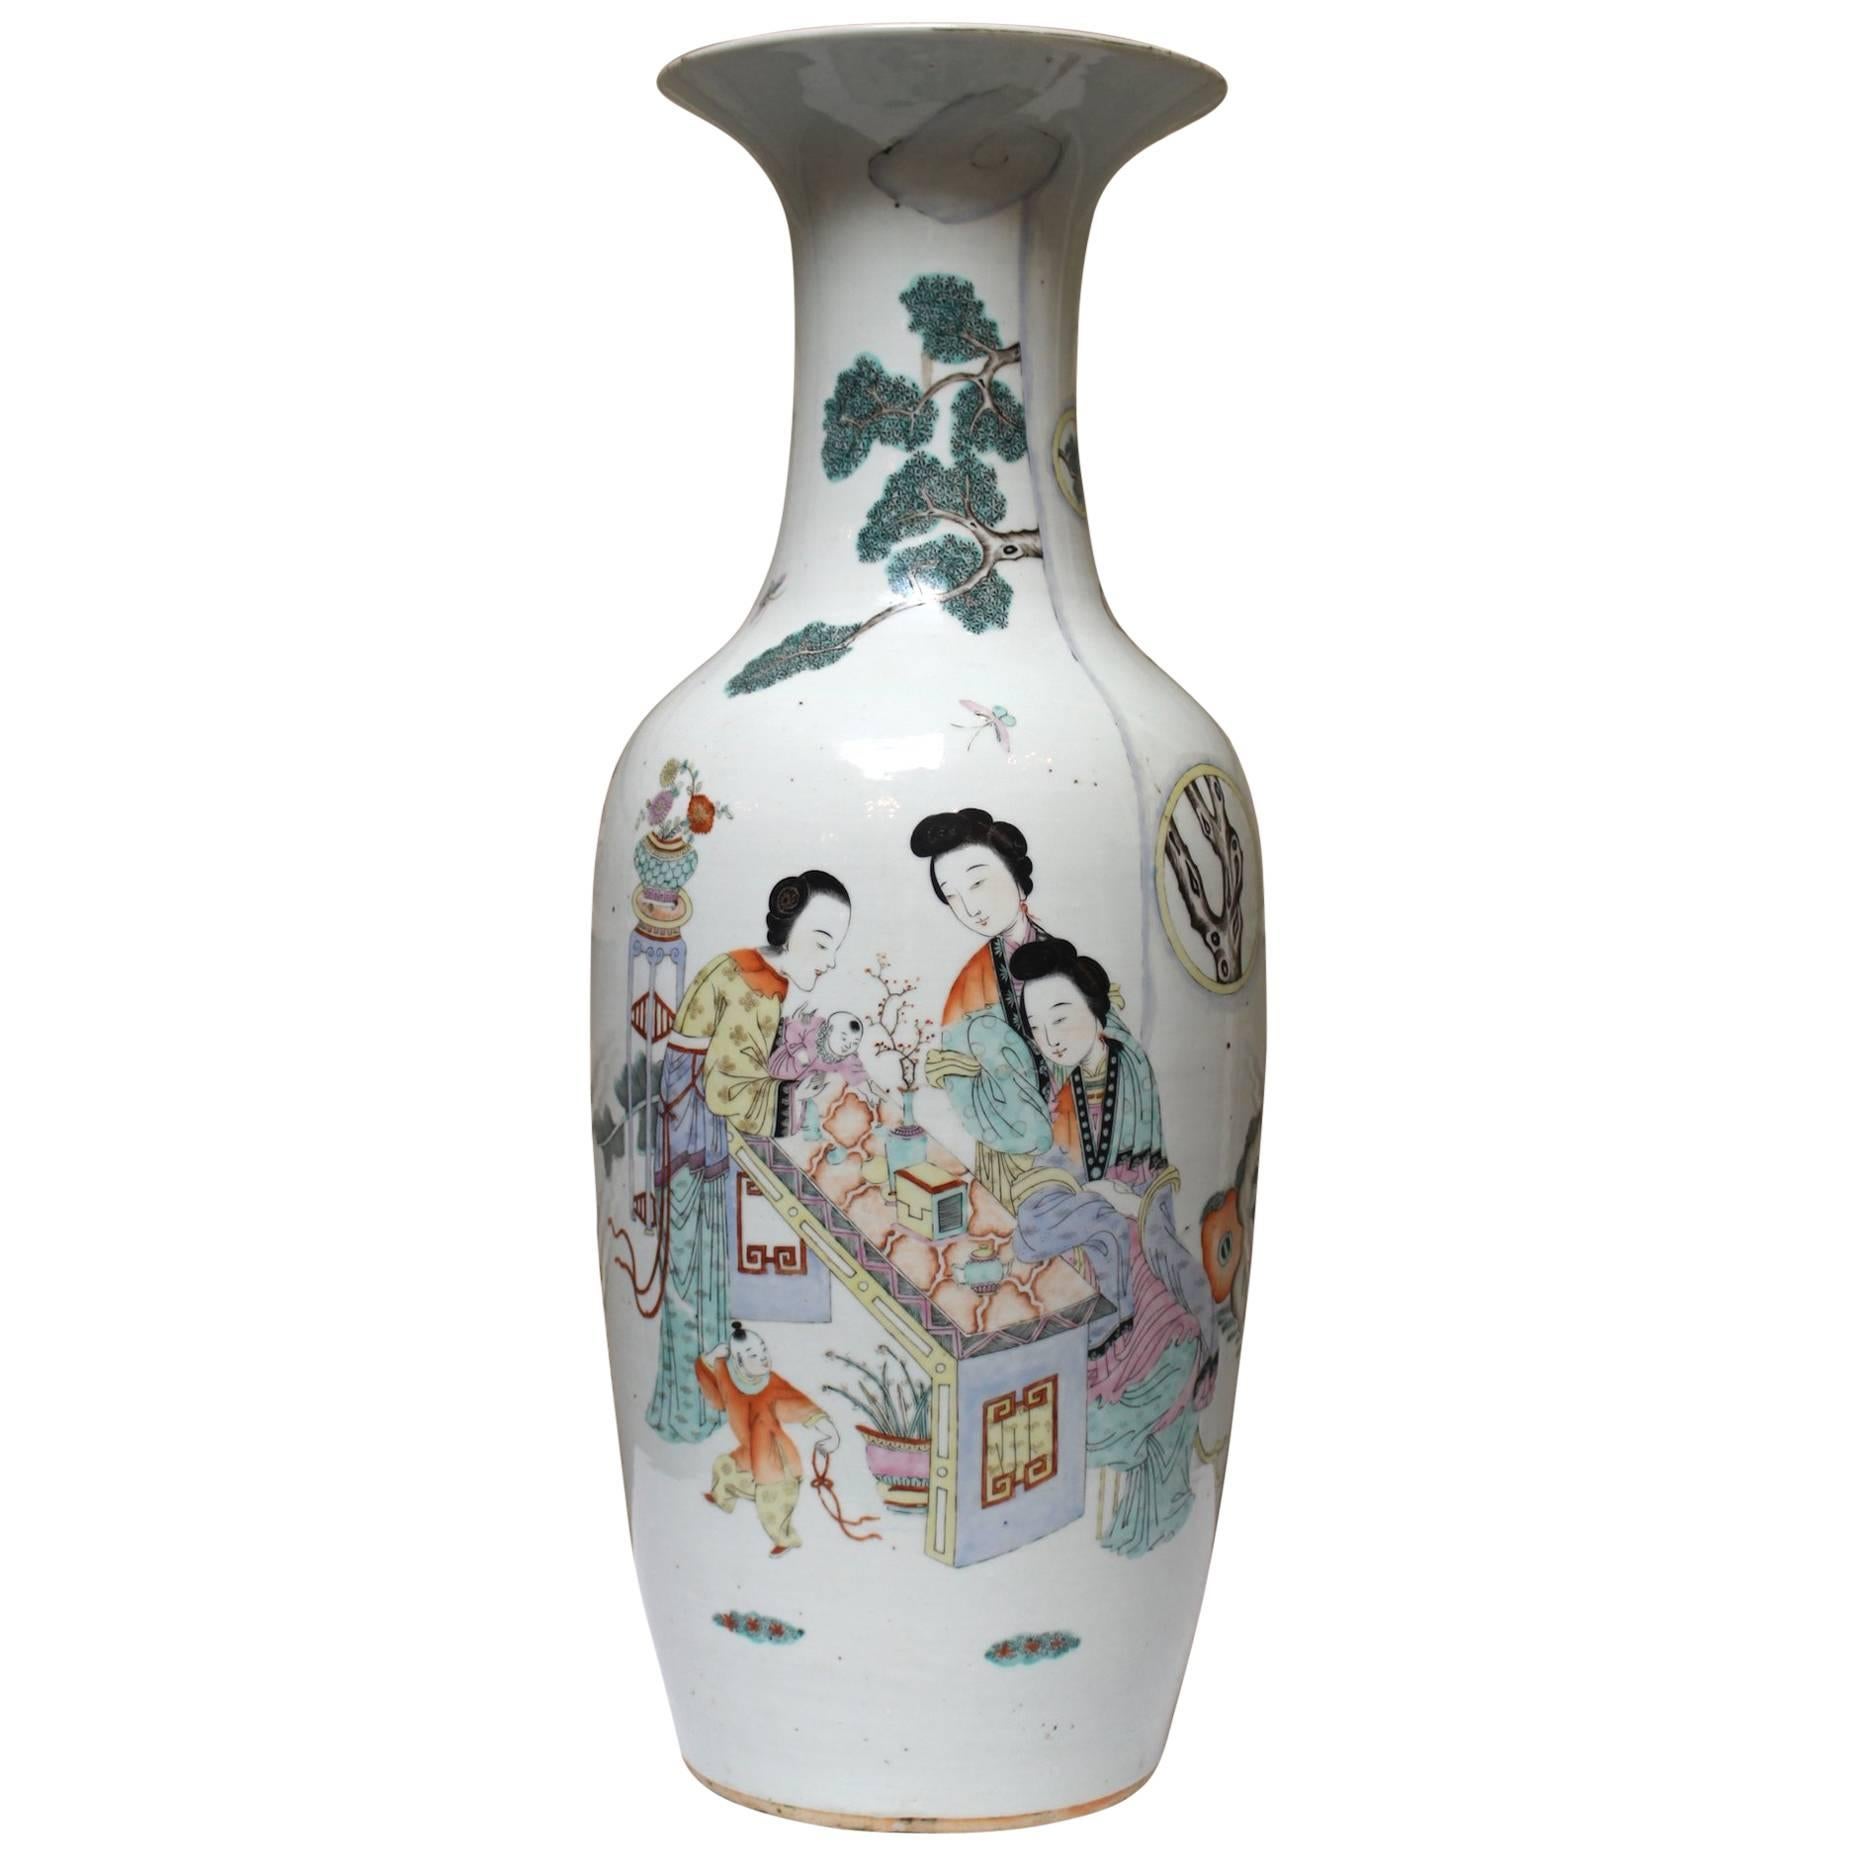  Grand vase en porcelaine chinoise